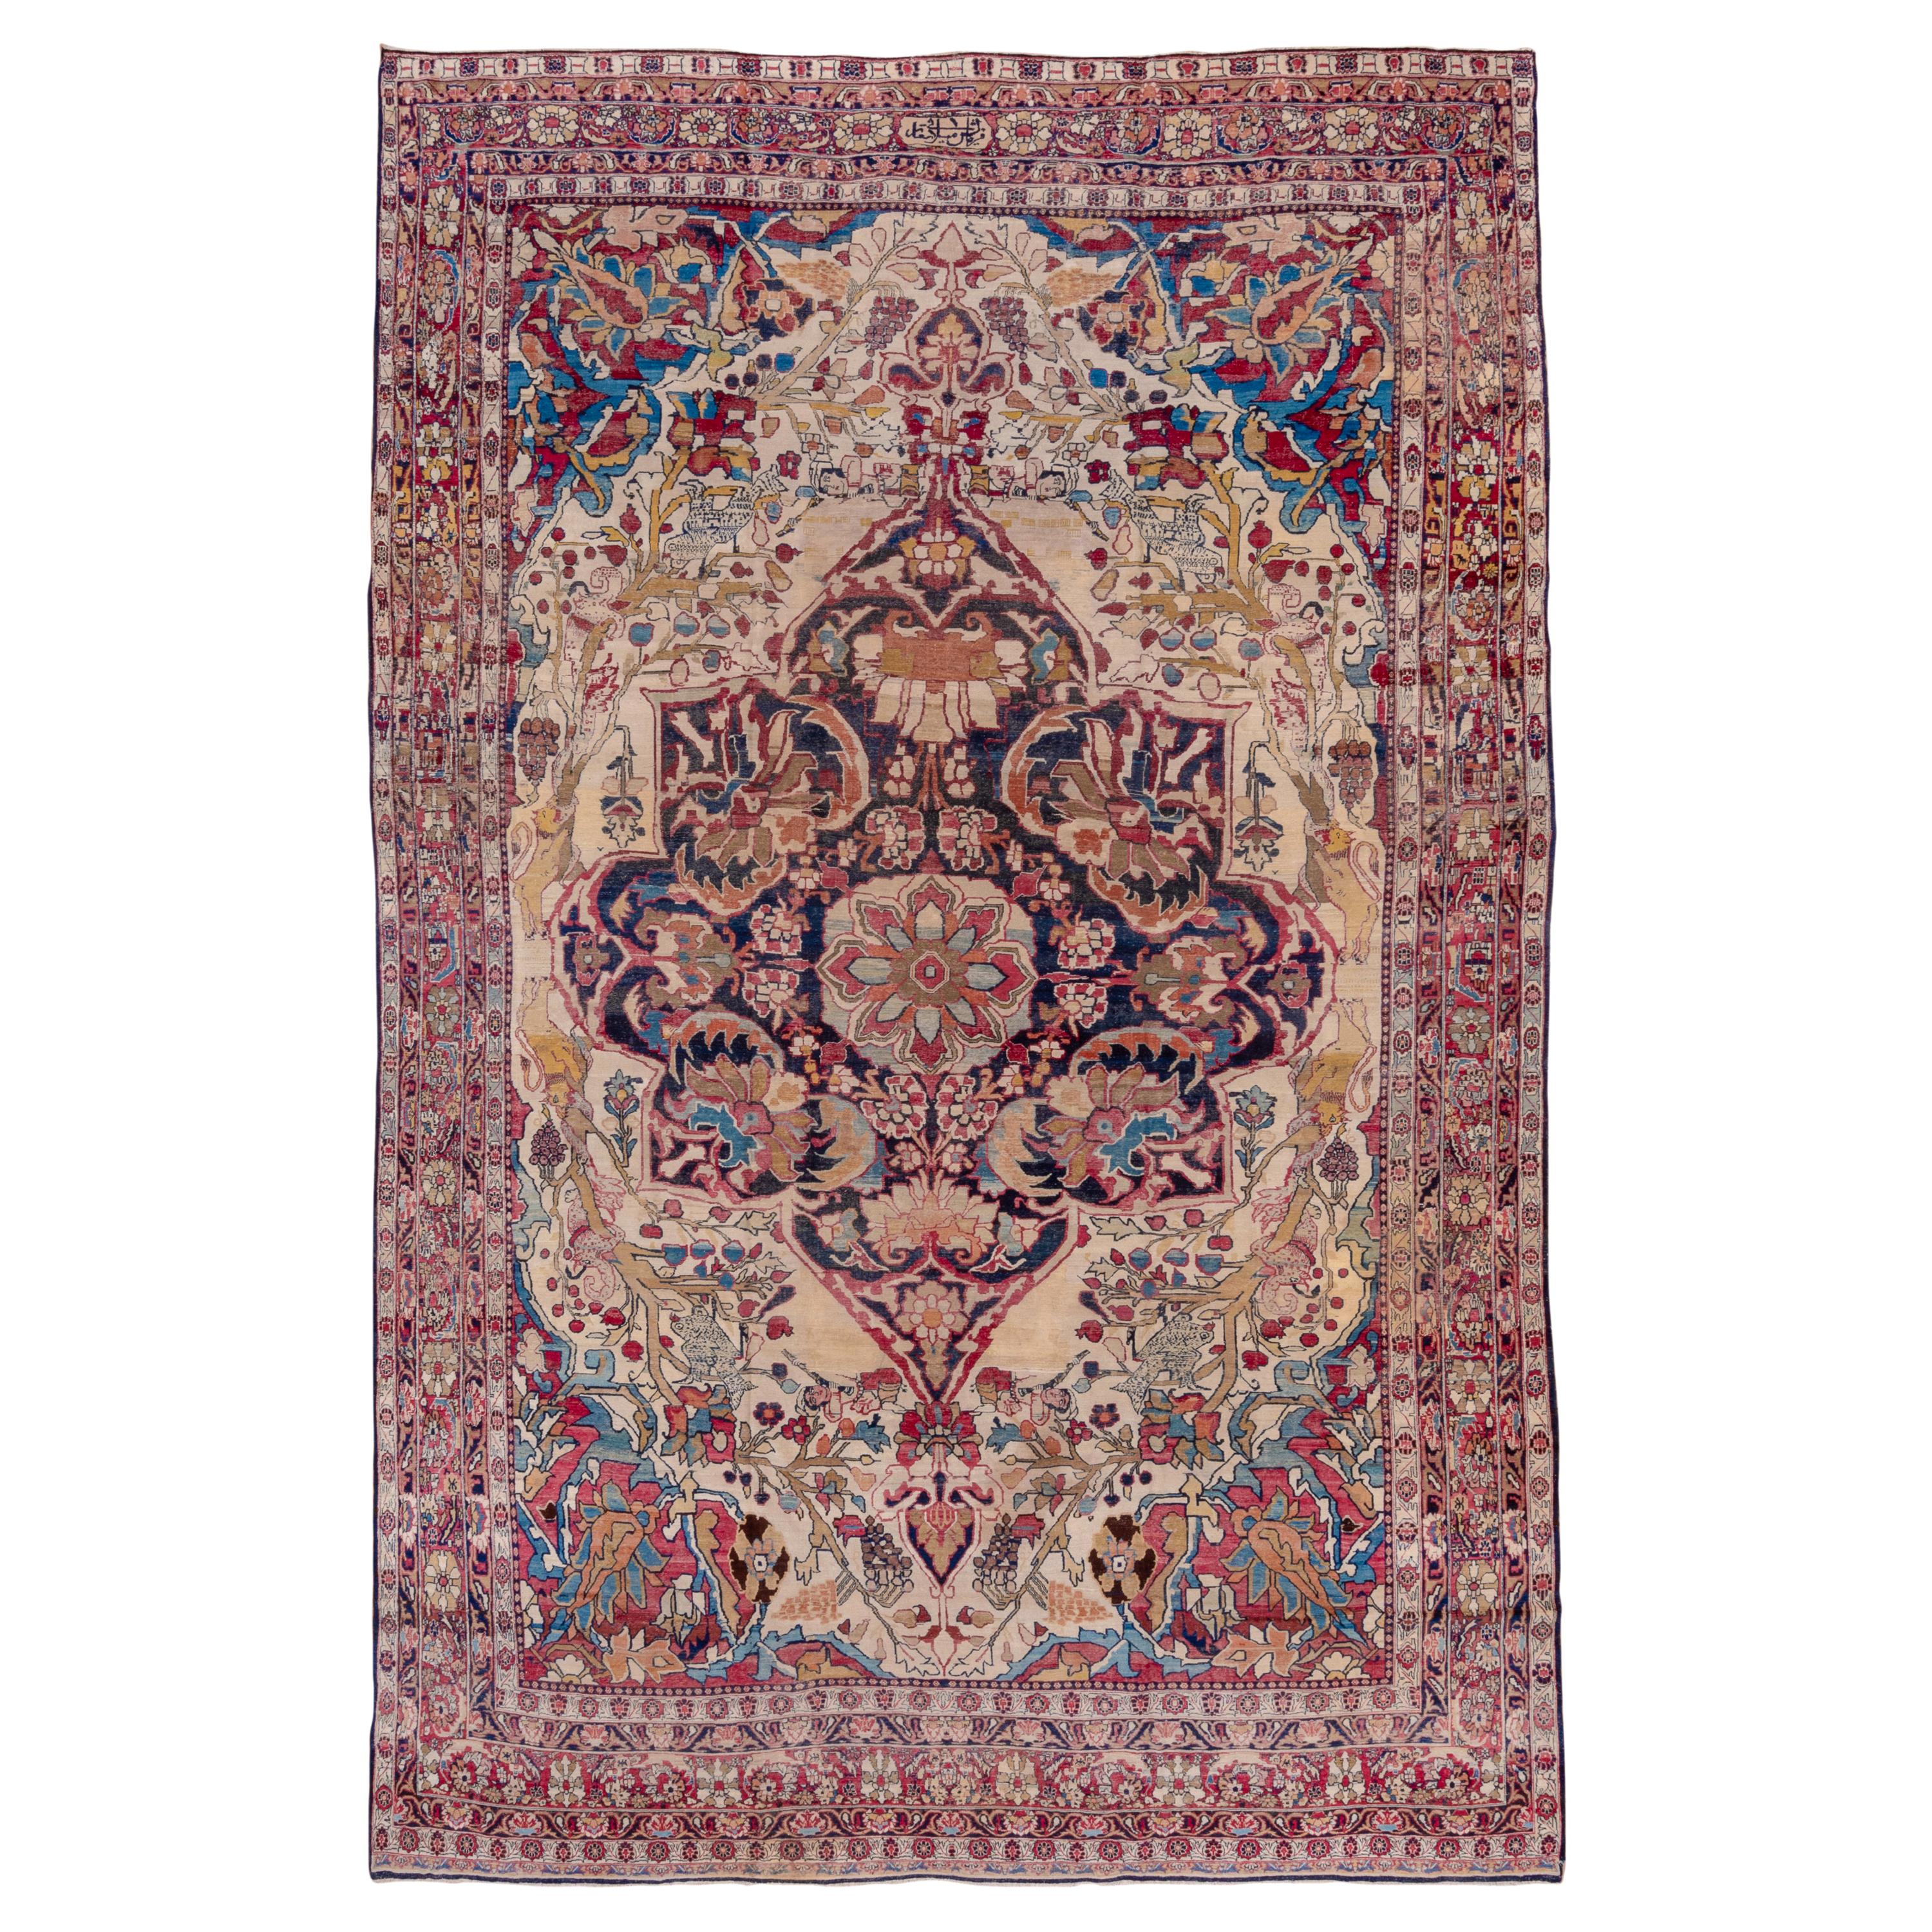 Rare Antique Persian Lavar Kerman Carpet, Colorful Outer Border and Accents